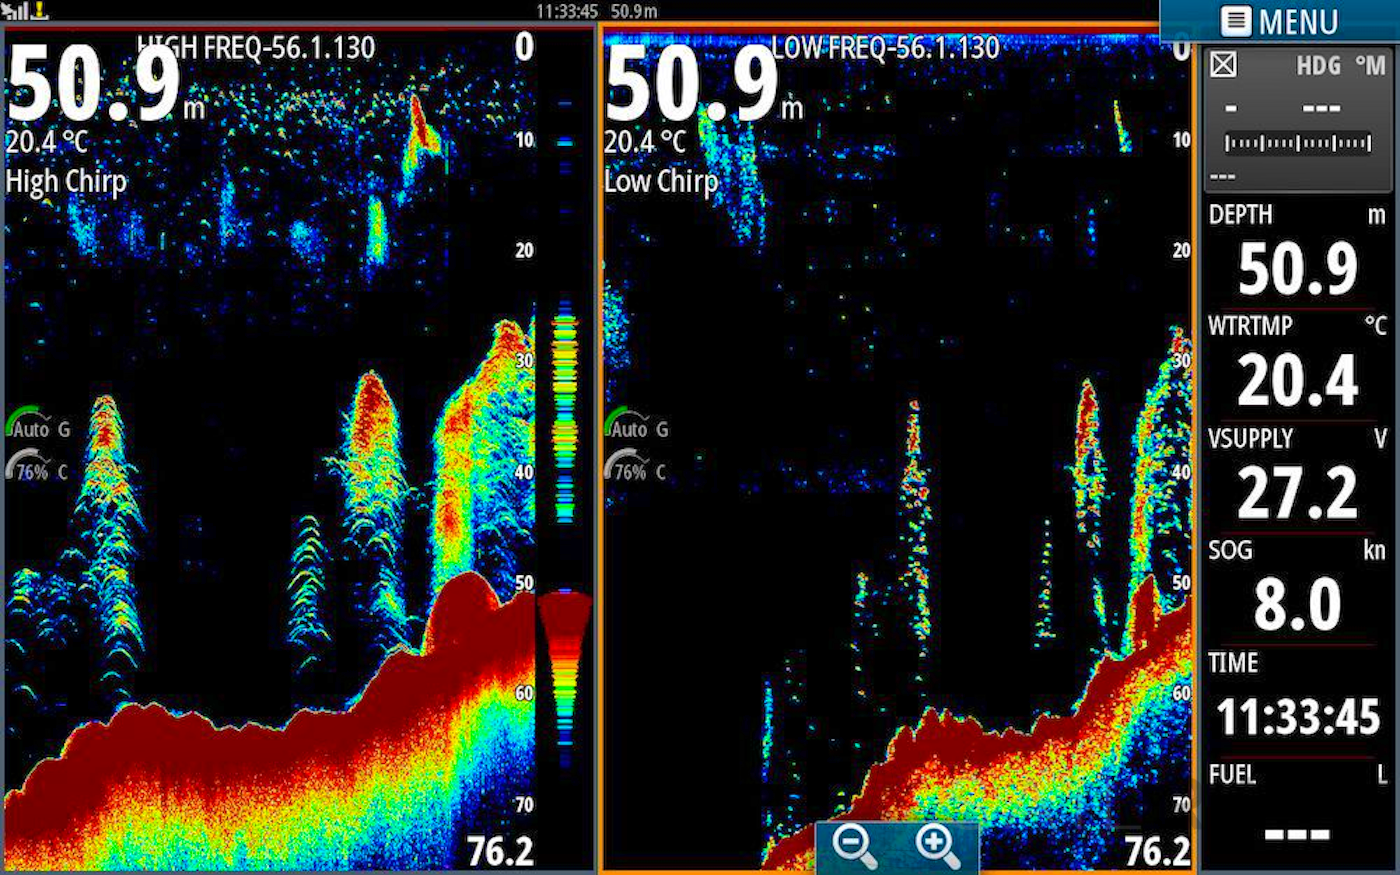 Navico S5100 high-performance CHIRP sonar module - image 2